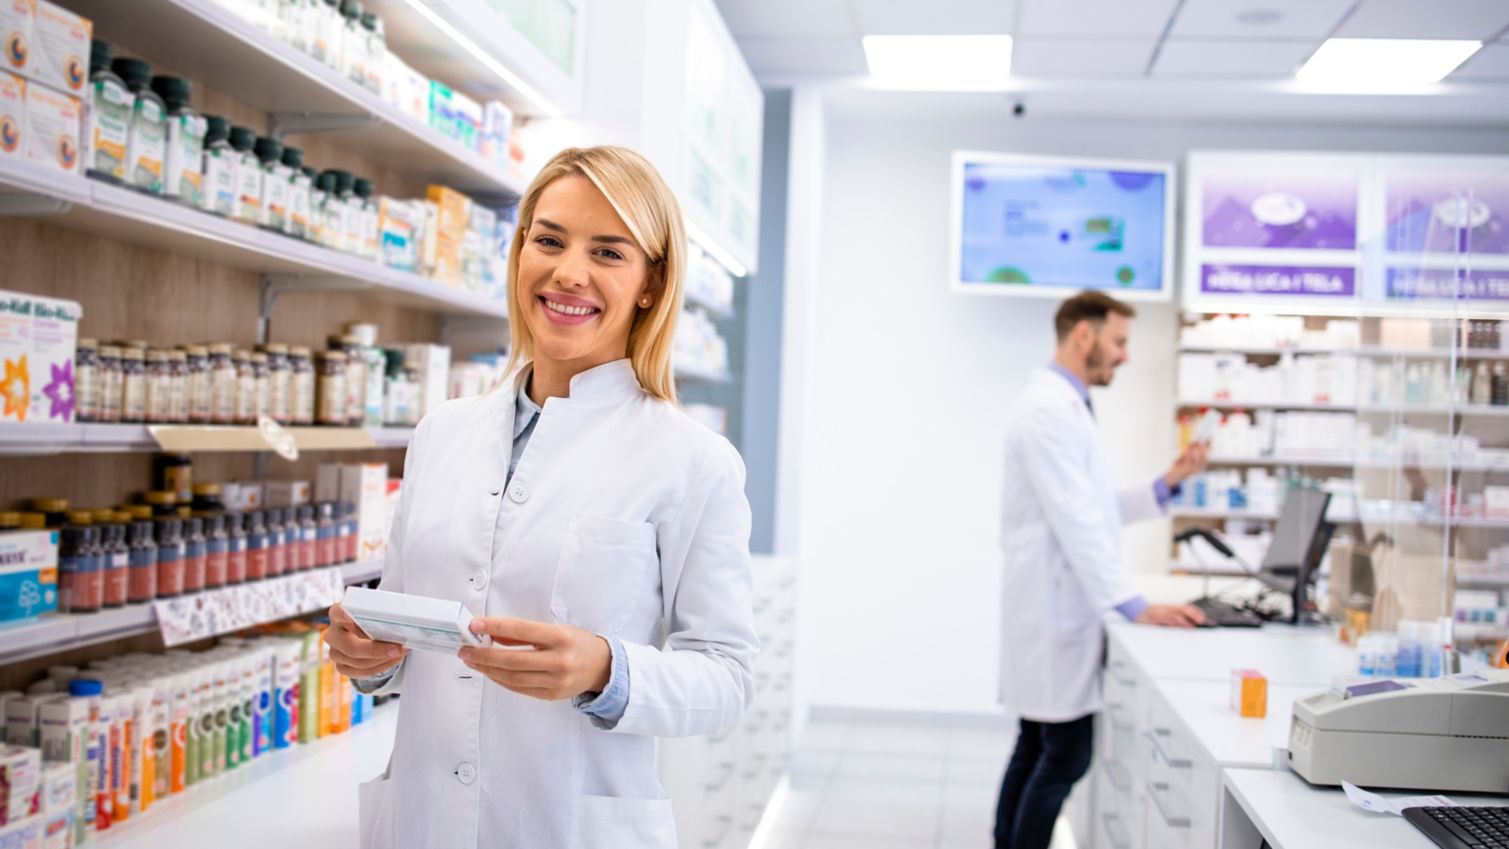 Smiling female pharmacist holding a box of medication.